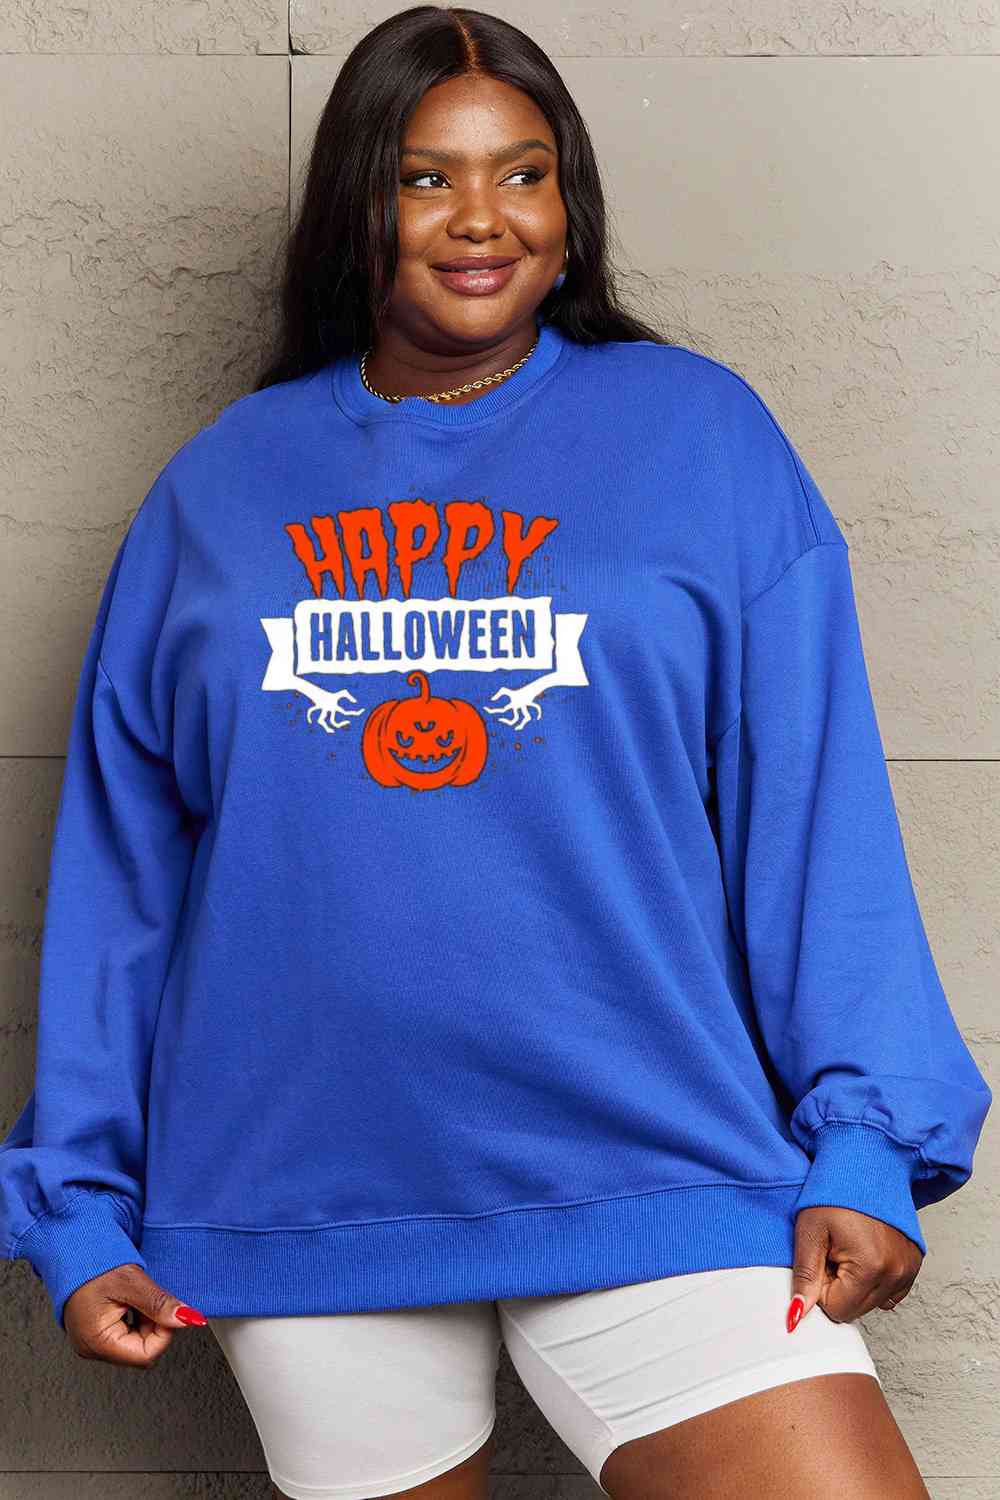 Simply Love Full Size HAPPY HALLOWEEN Graphic Sweatshirt, MyriadMart